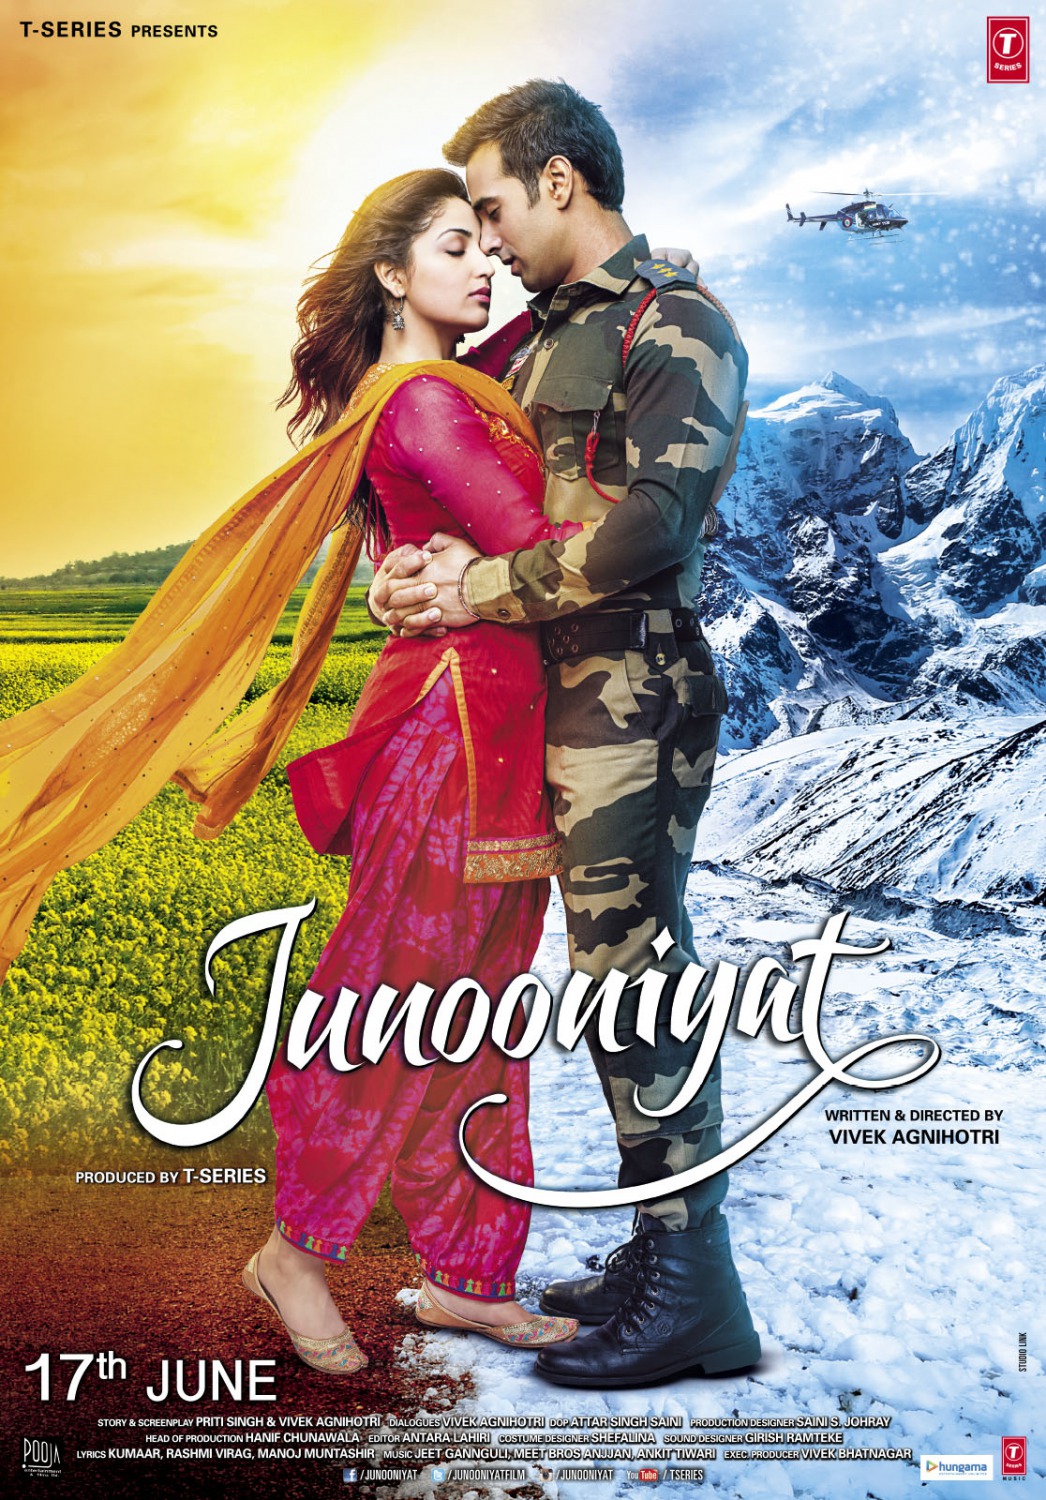 Extra Large Movie Poster Image for Junooniyat (#1 of 3)